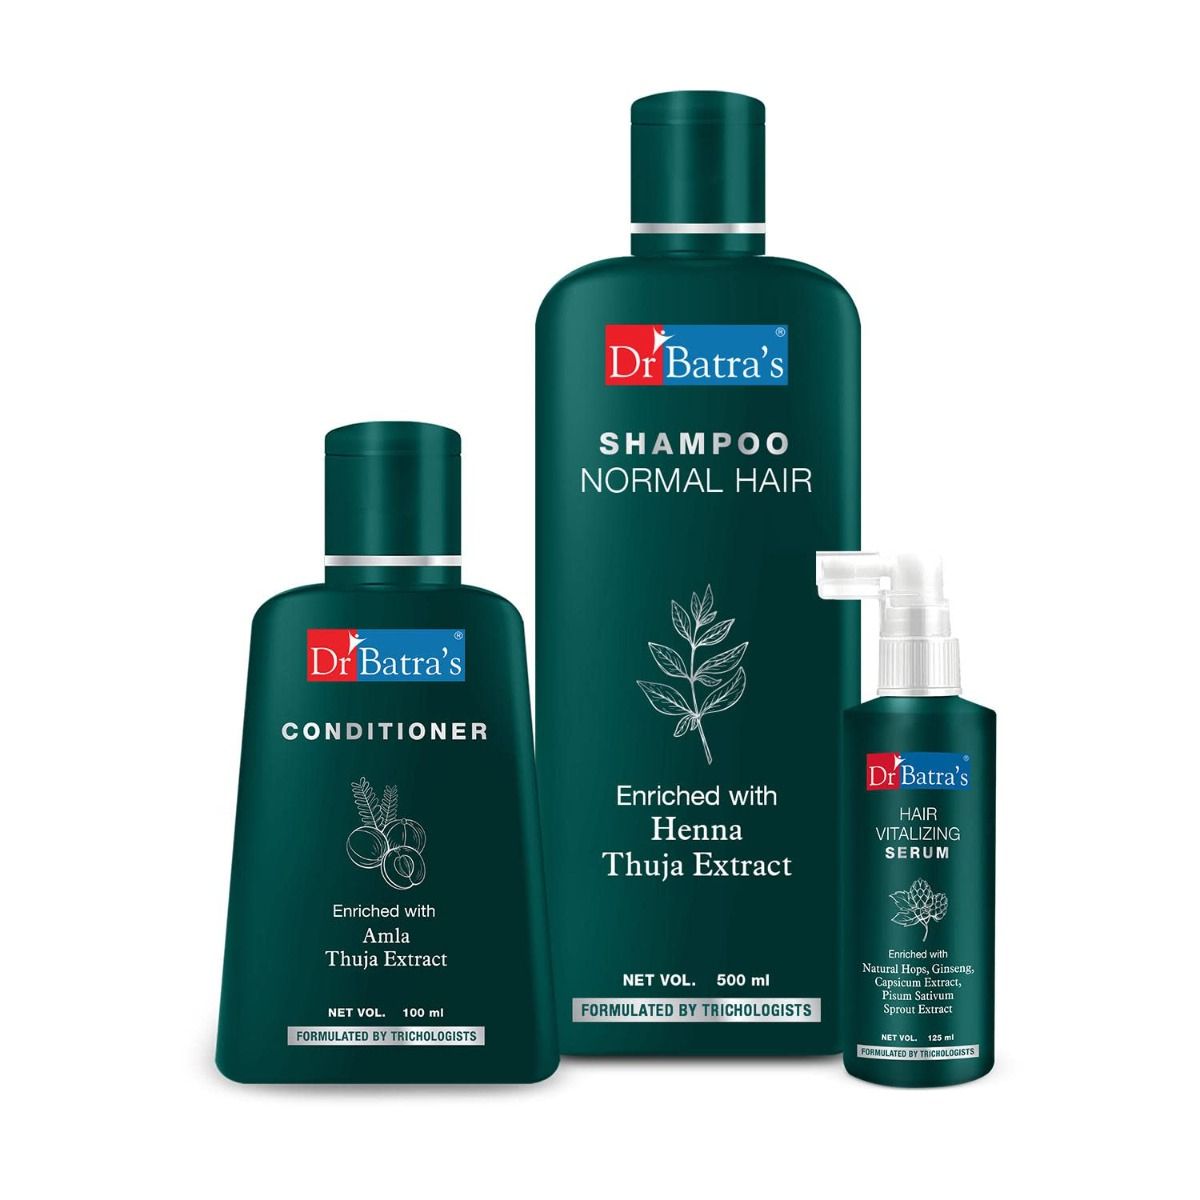     			Dr Batra's Hair Vitalizing Serum 125 ml, Conditioner - 100 ml and Normal Shampoo - 500 ml